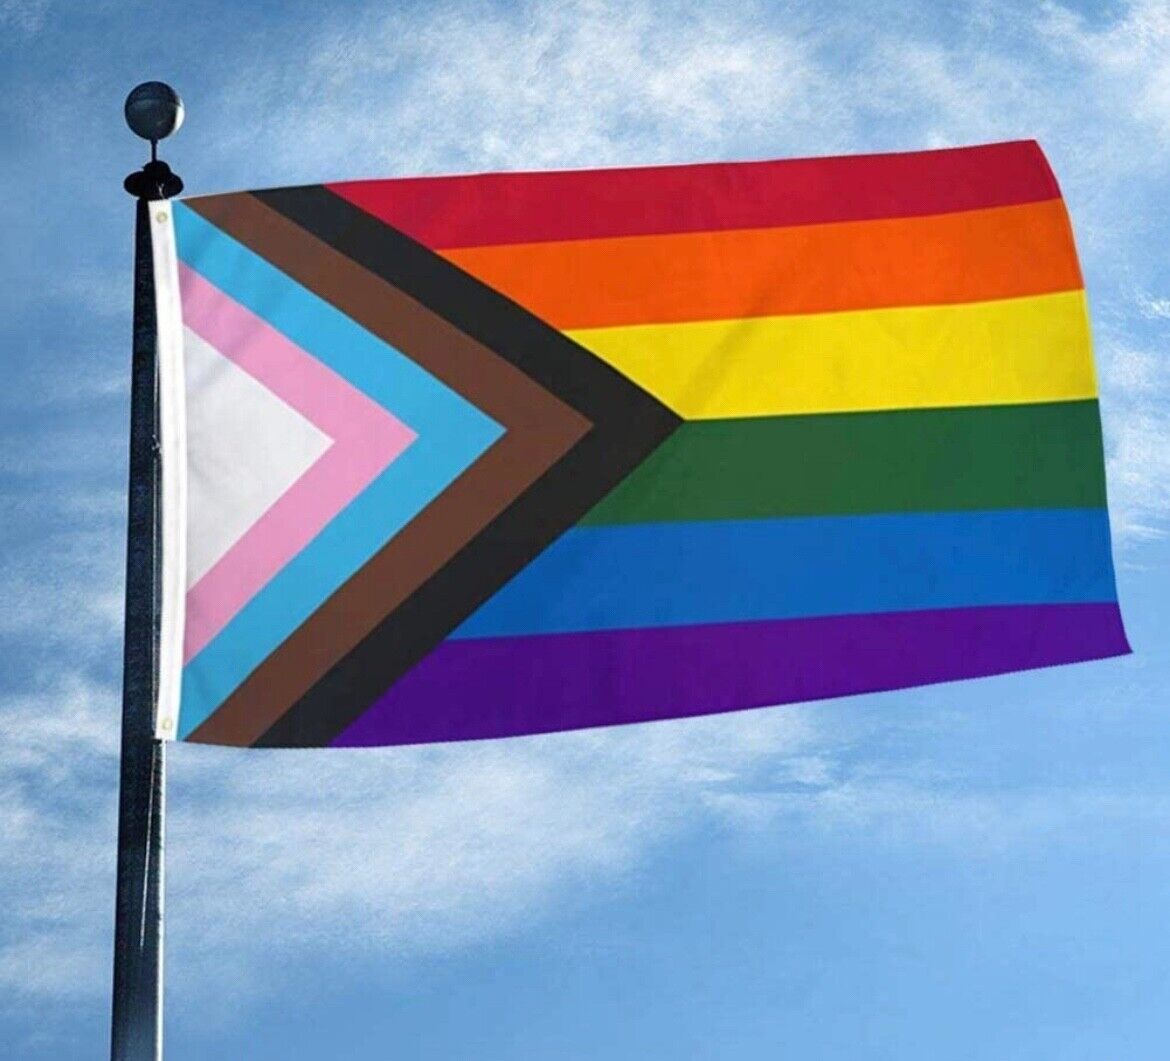 Progress Pride Rainbow Flag 3x5 ft LGBTQ Gay Lesbian Trans People of Color Без бренда